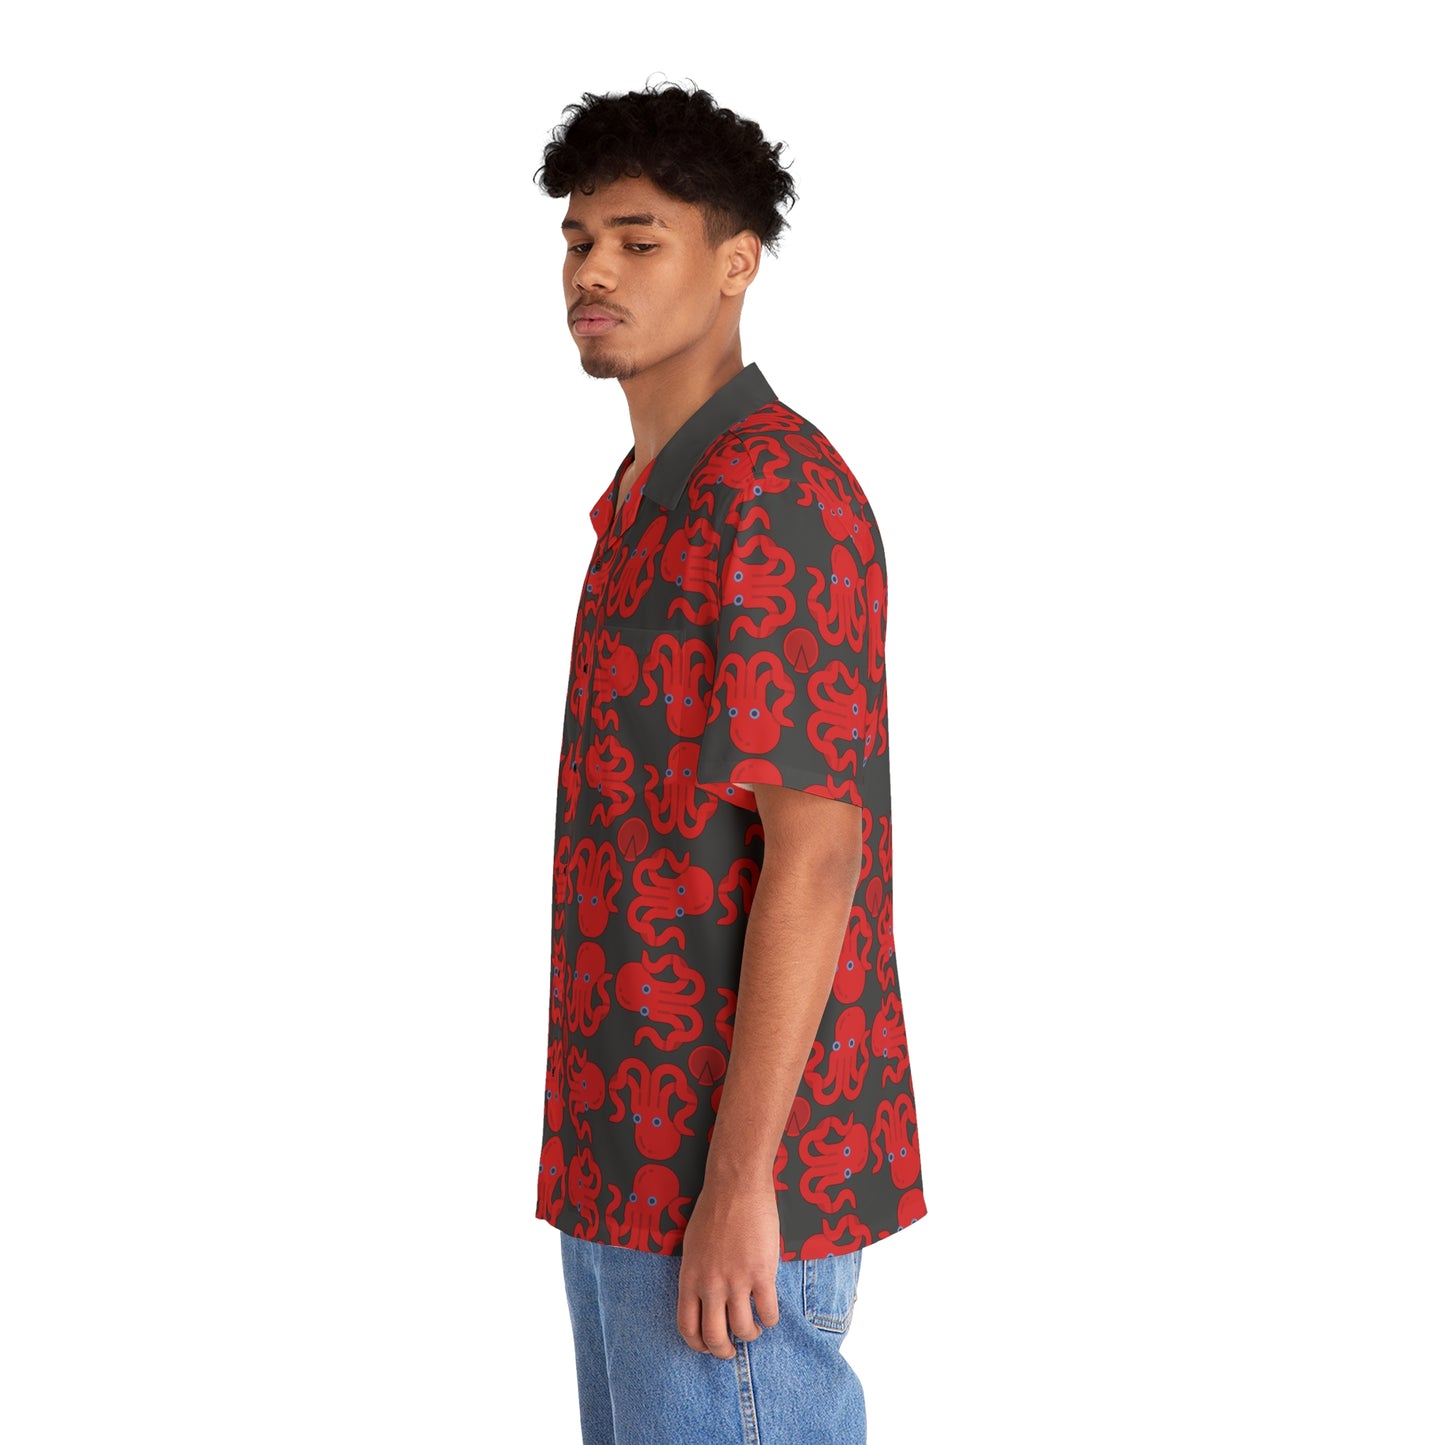 Octopie - Big Print - Black 000000 - Men's Hawaiian Shirt